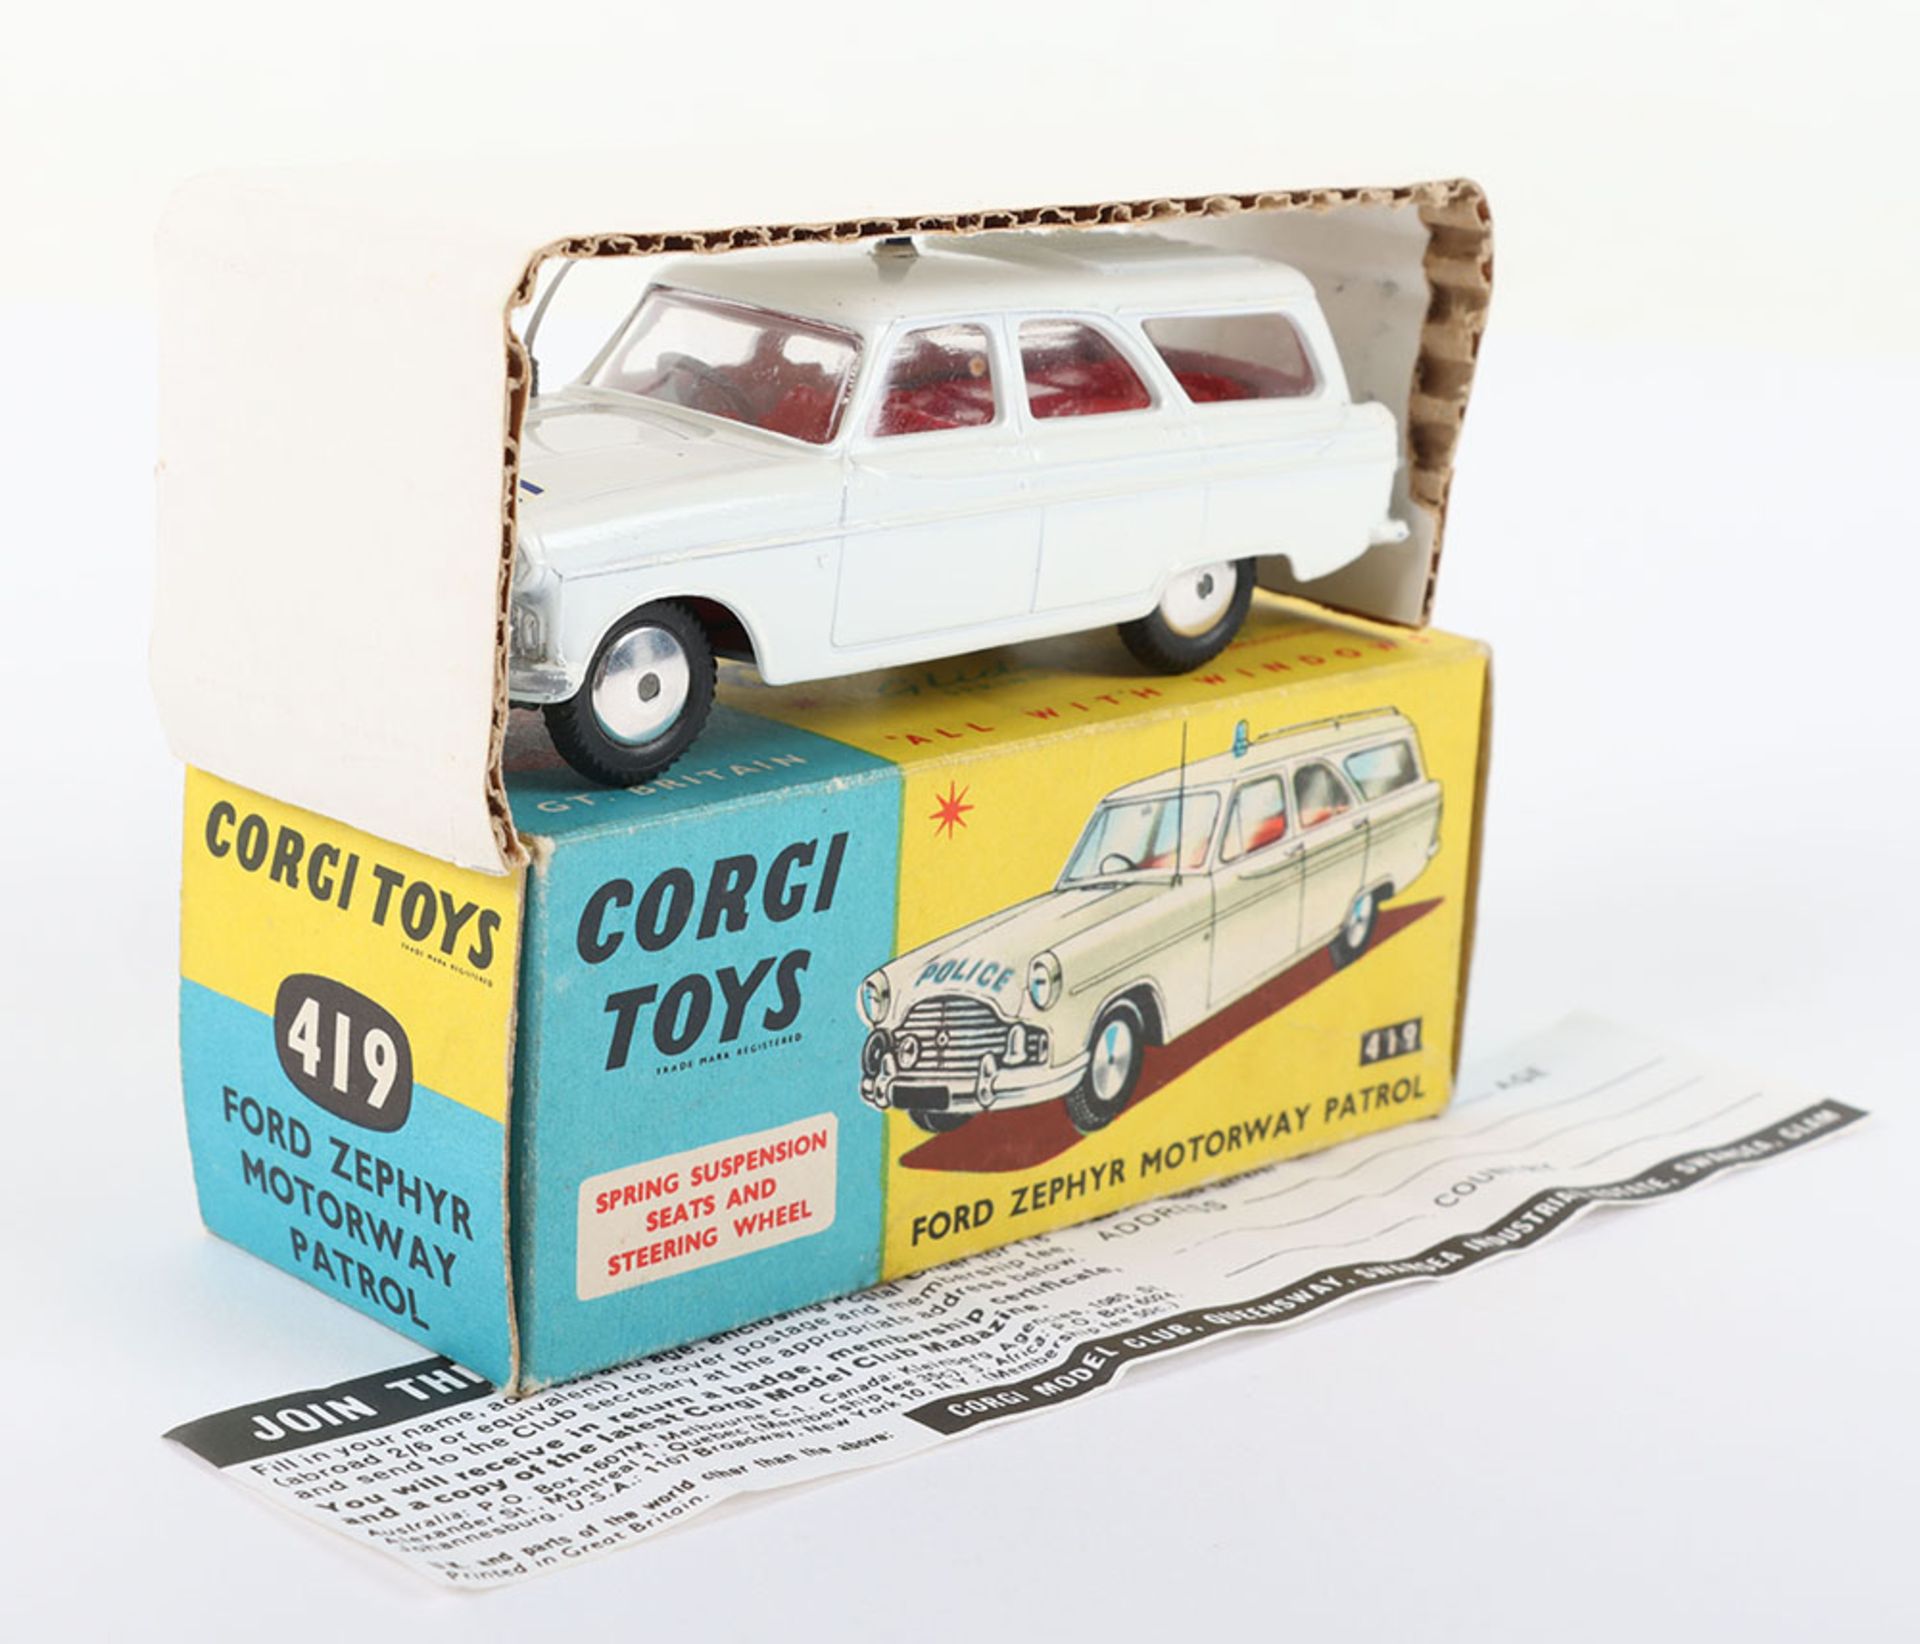 Corgi Toys 419 Ford Zephyr Motorway Patrol